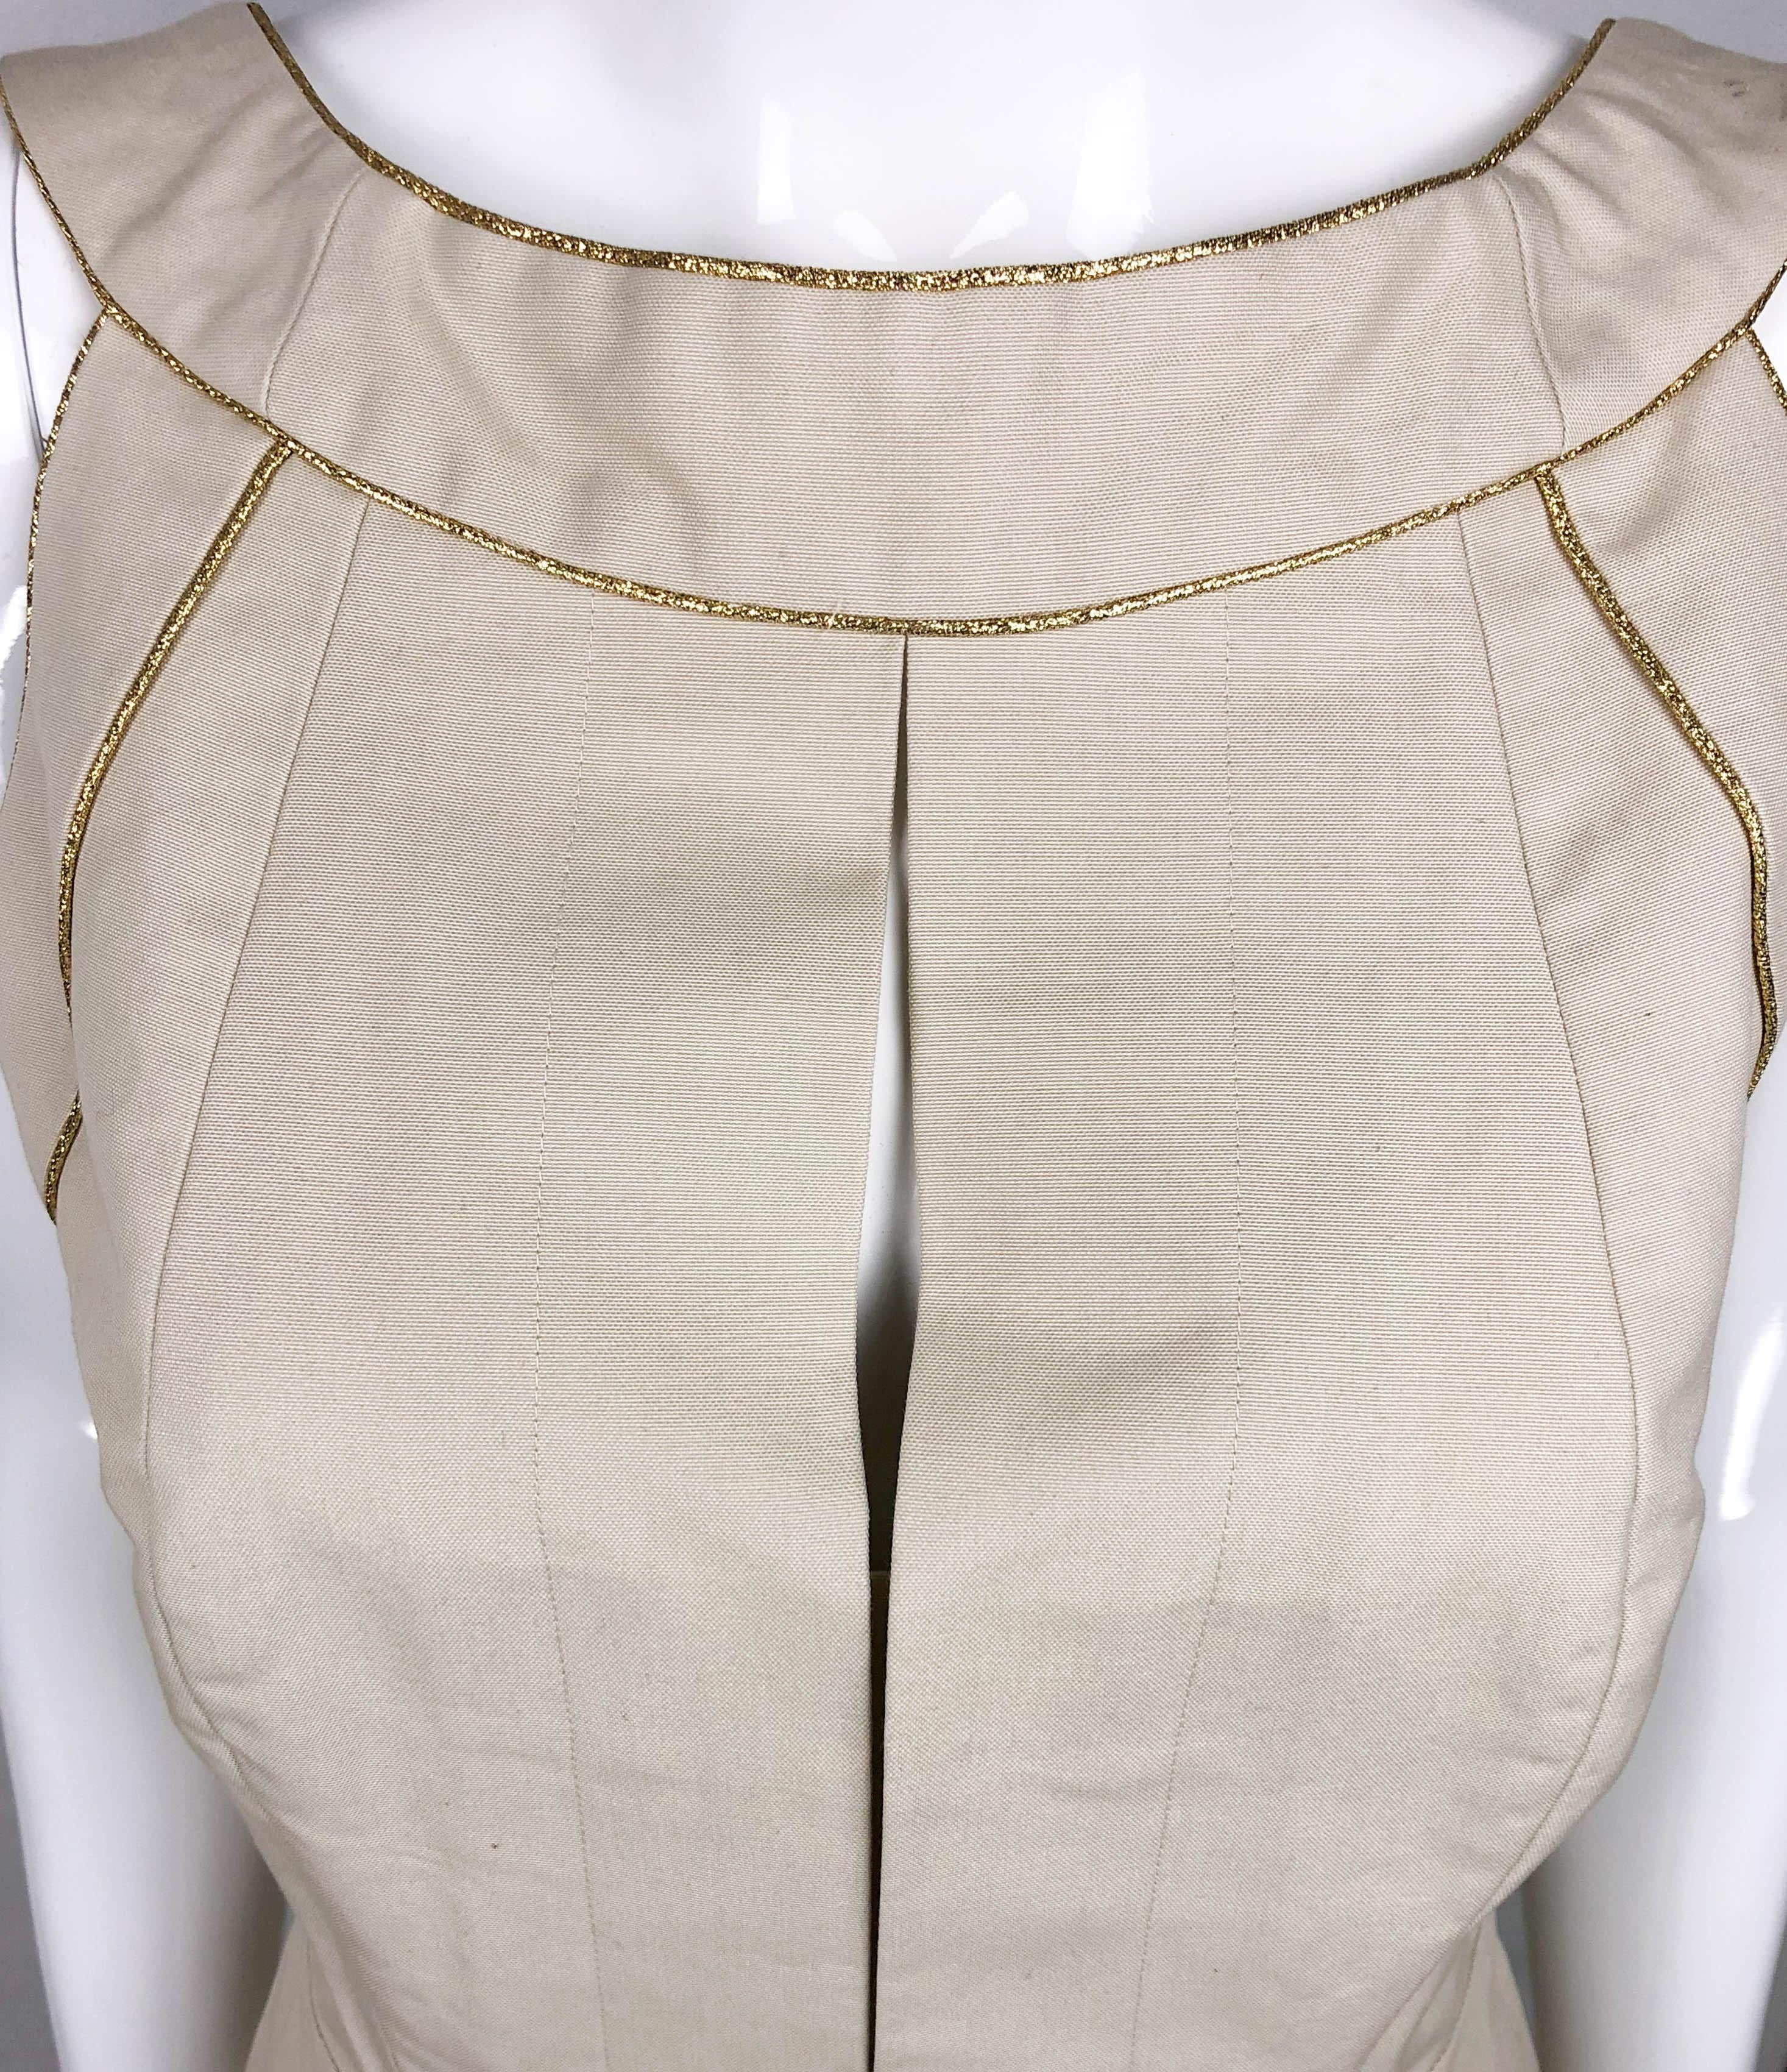 Yves Saint Laurent Cream Cotton Dress With Gold Trim, 2011 For Sale 4